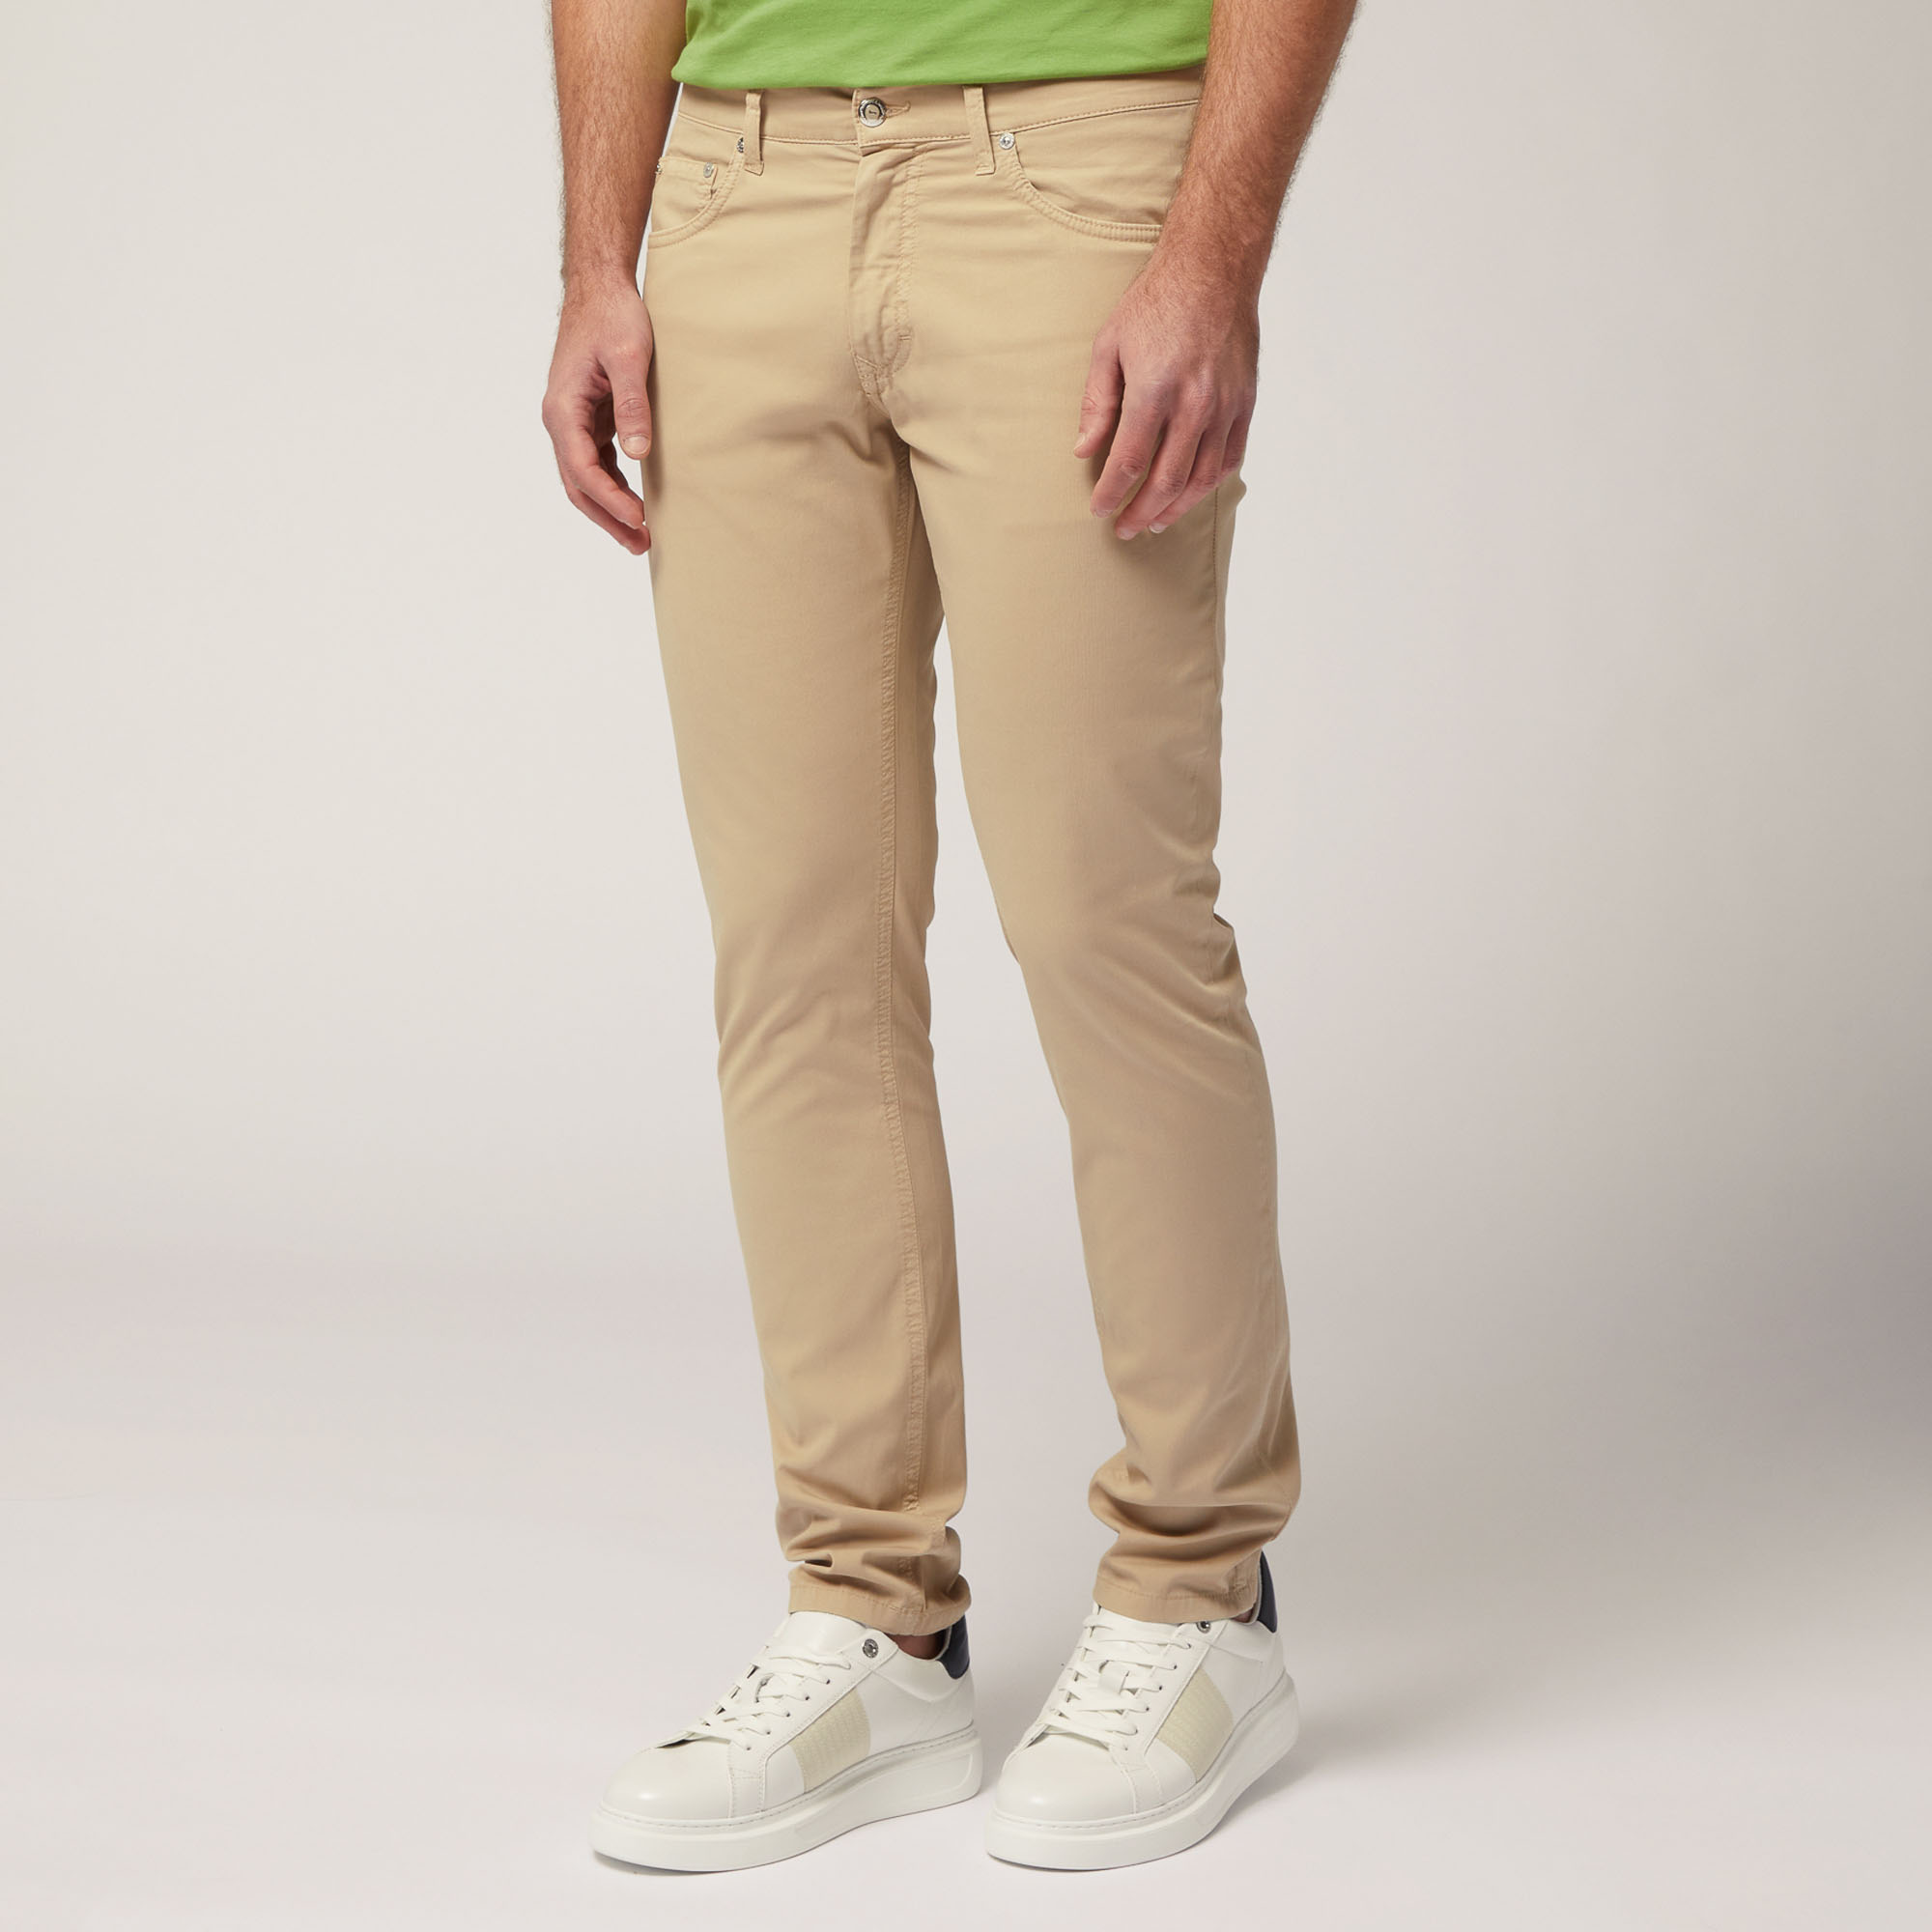 Narrow Five-Pocket Pants, Beige, large